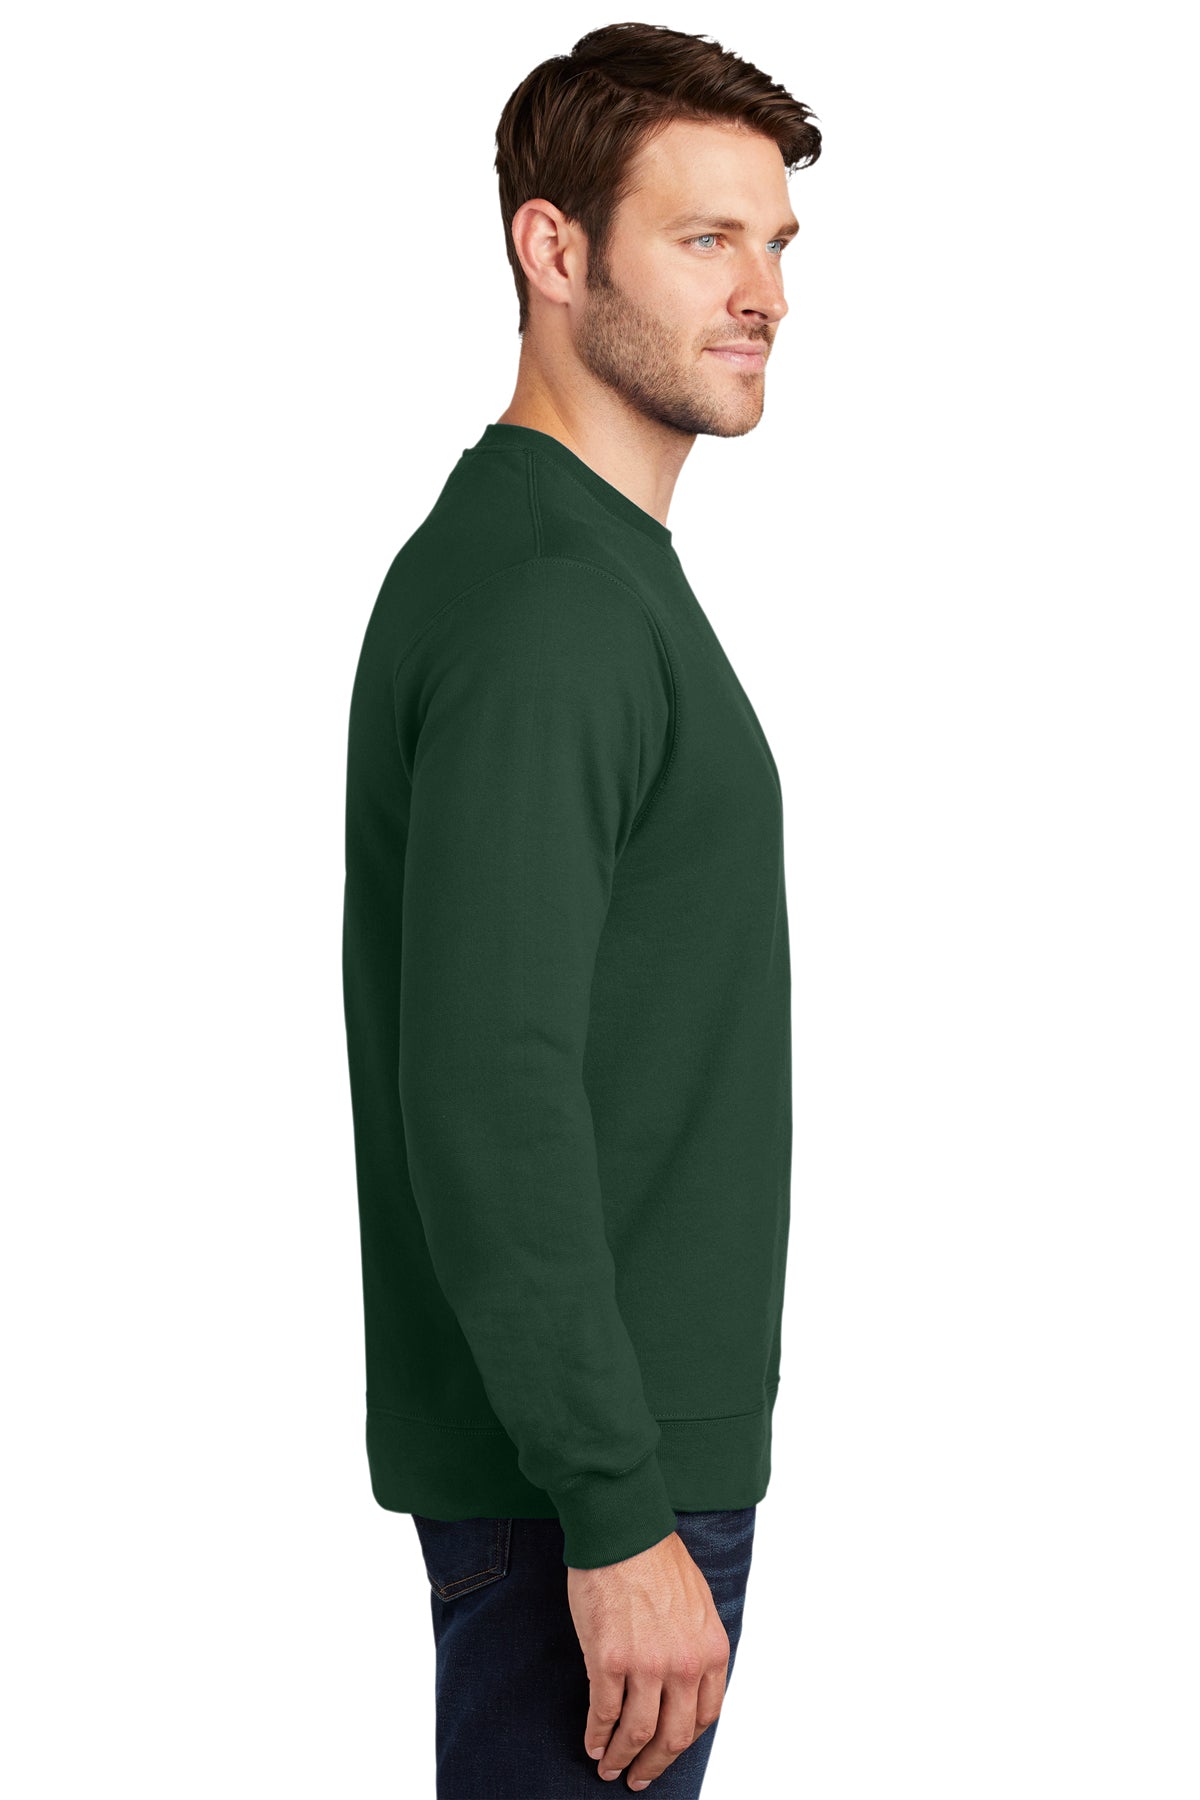 port & company_pc850 _forest green_company_logo_sweatshirts